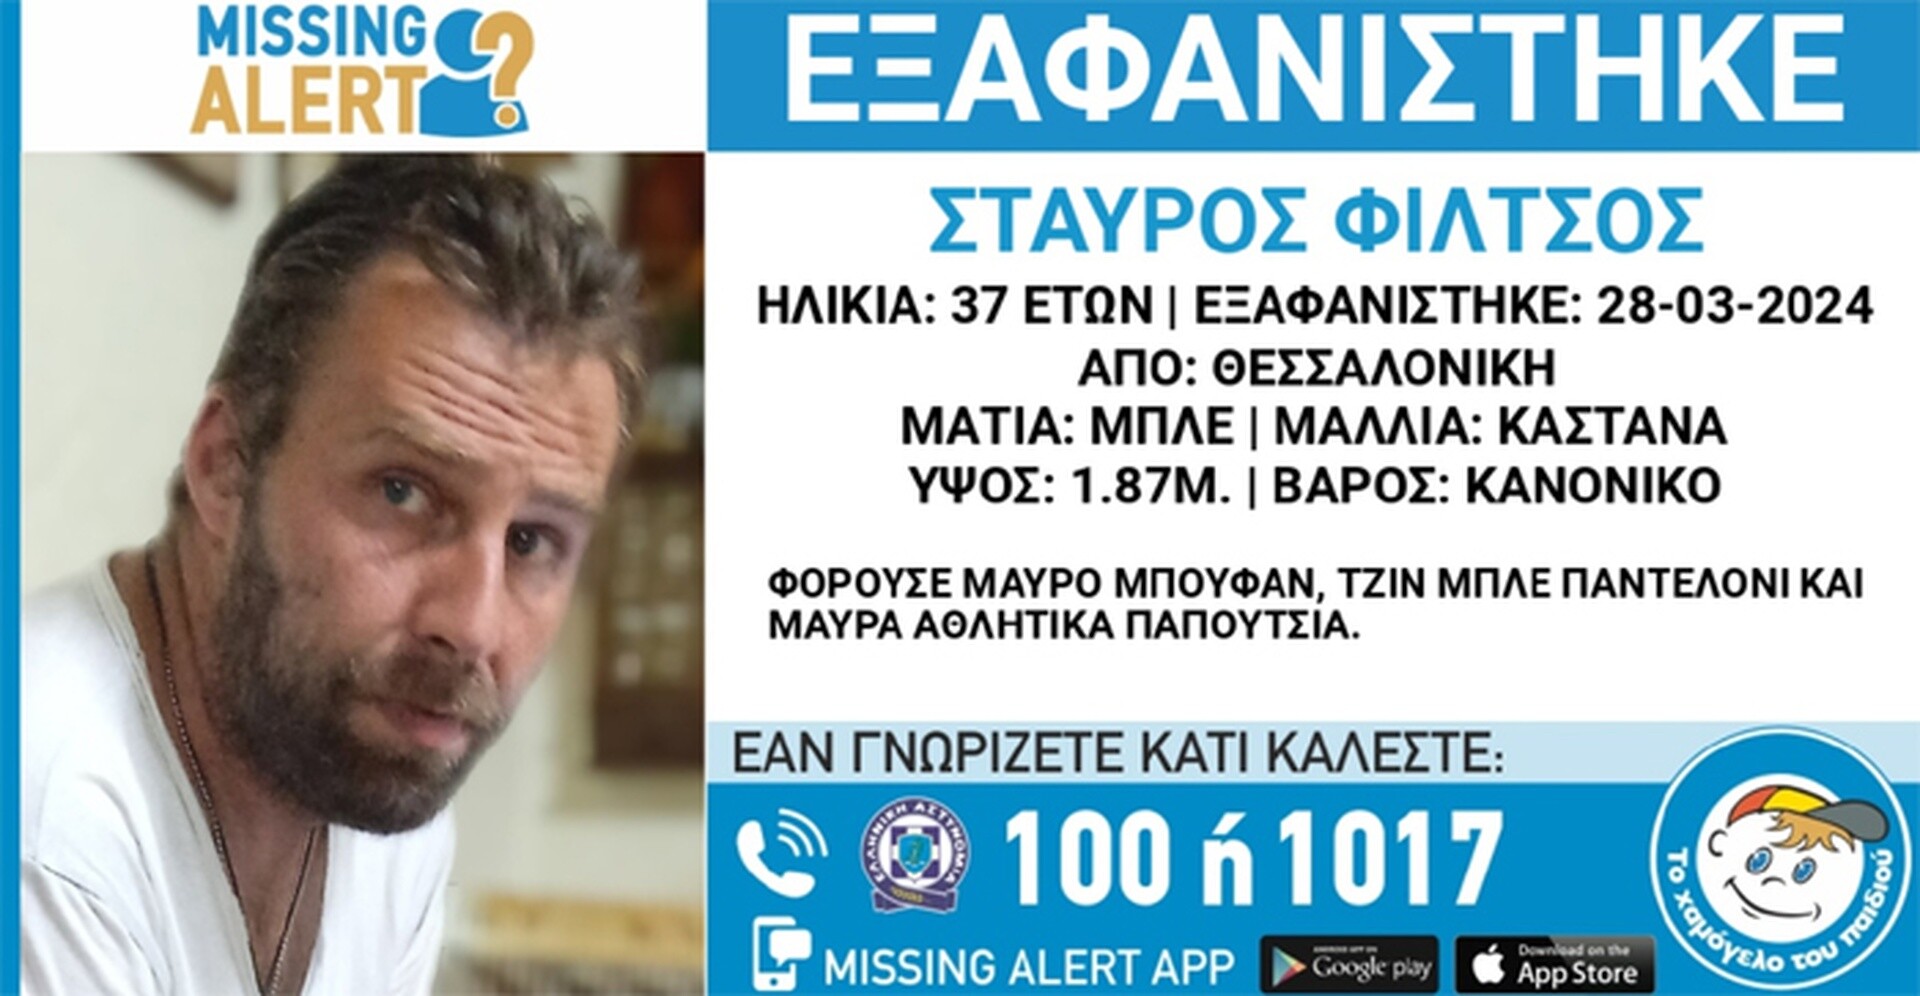 Missing alert στη Θεσσαλονίκη: Συναγερμός για την εξαφάνιση 37χρονου